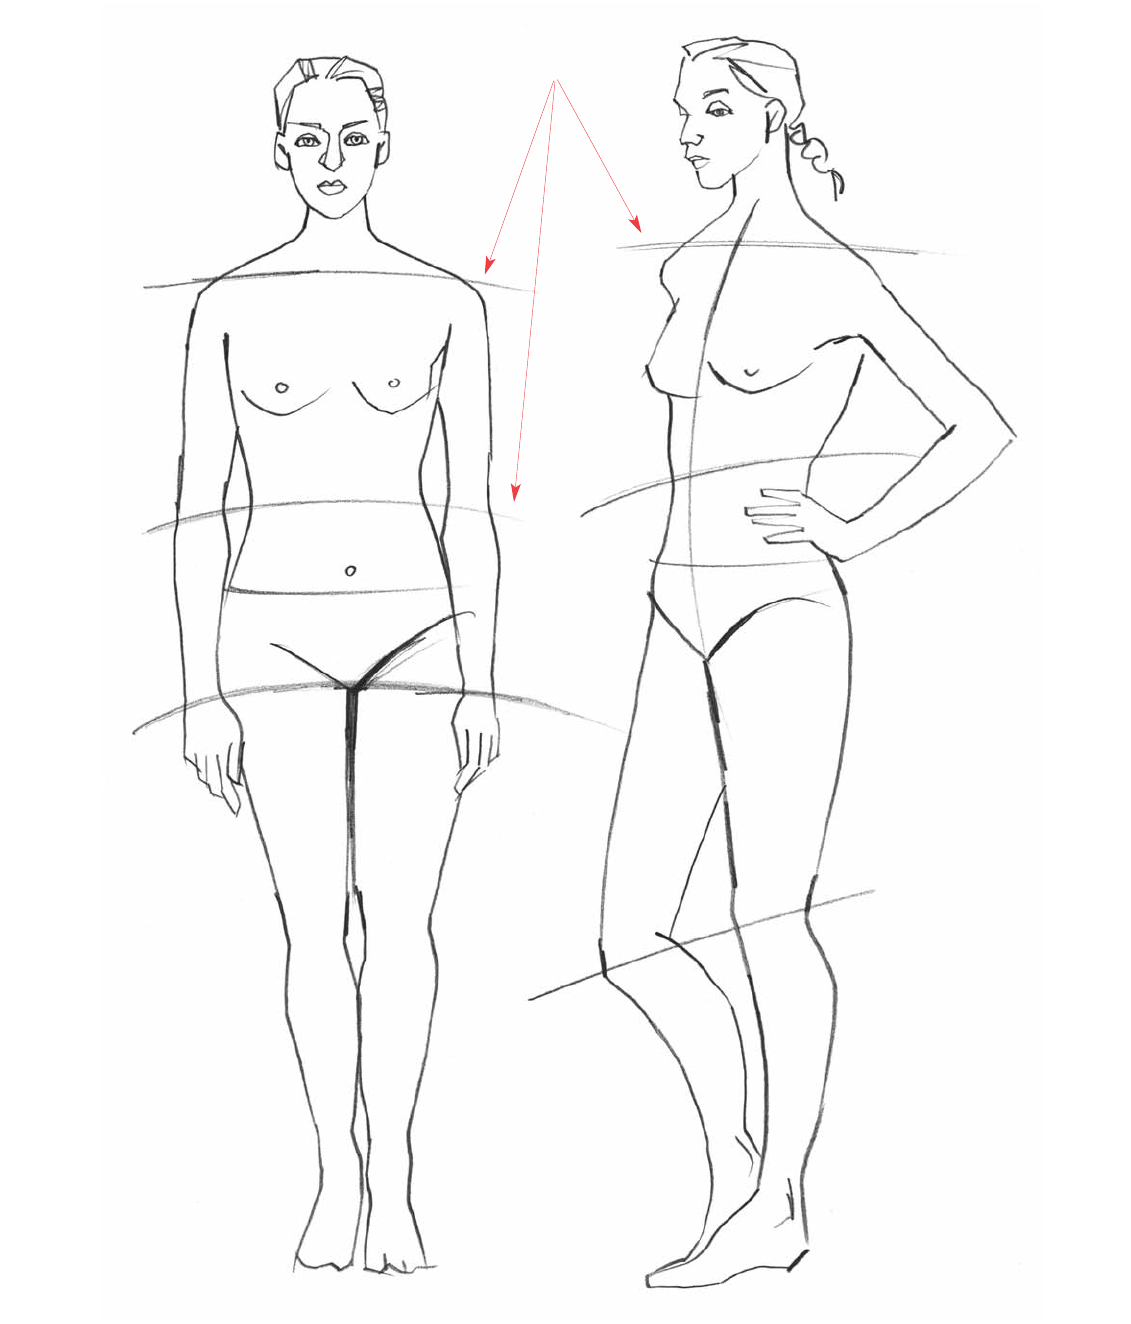 Fashion Croquis | Fashion figure drawing, Figure drawing, Drawing body poses